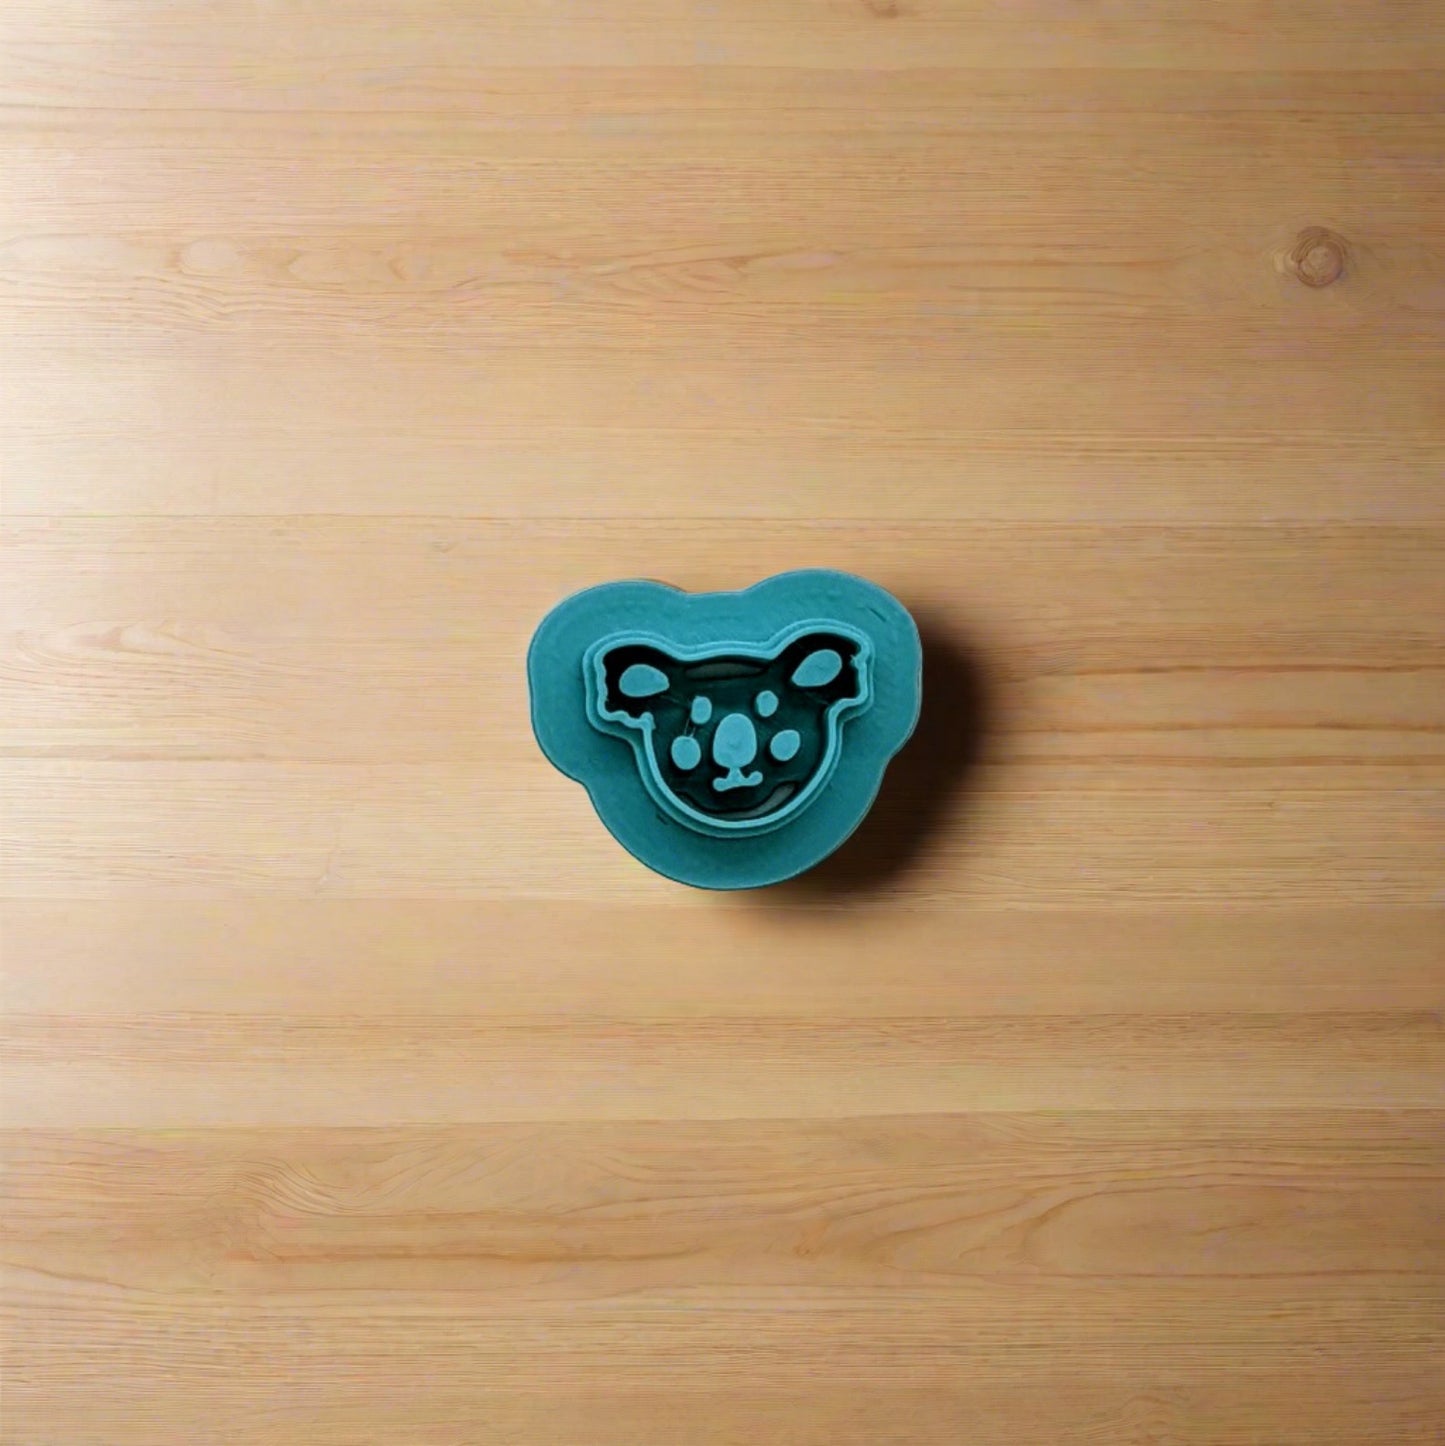 Koala Bear Head Cookie Cutter: Versatile Tool for Cookies, Ceramics, Pottery, Fondant, and More